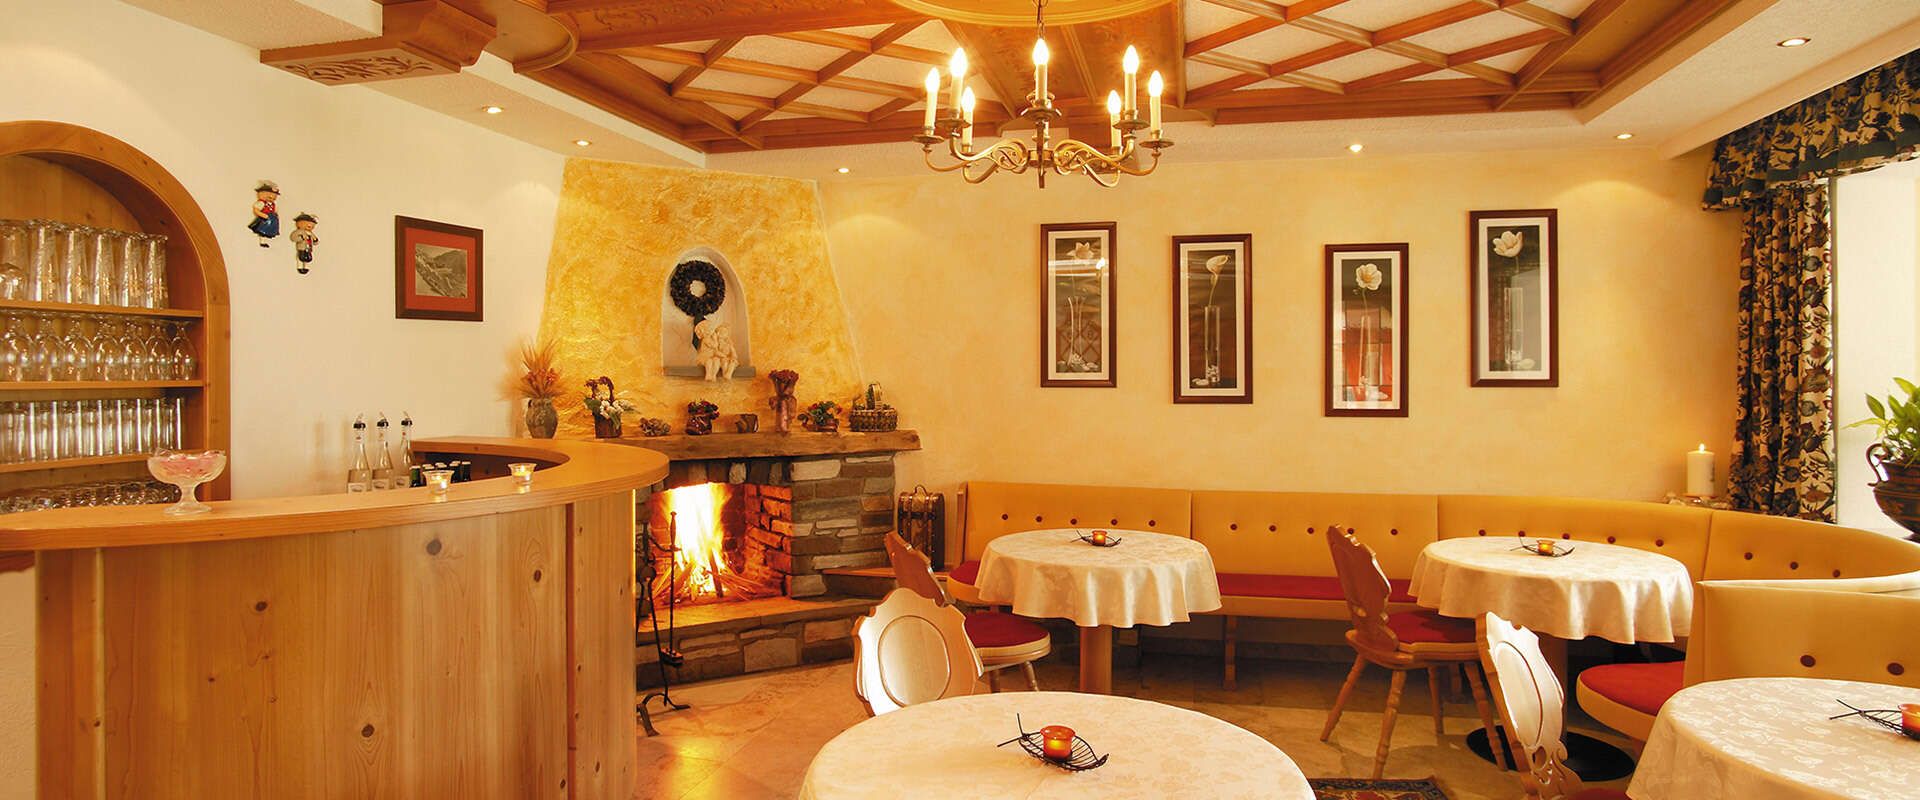 House bar in the Hotel Alpenherz in the Zillertal, Tyrol